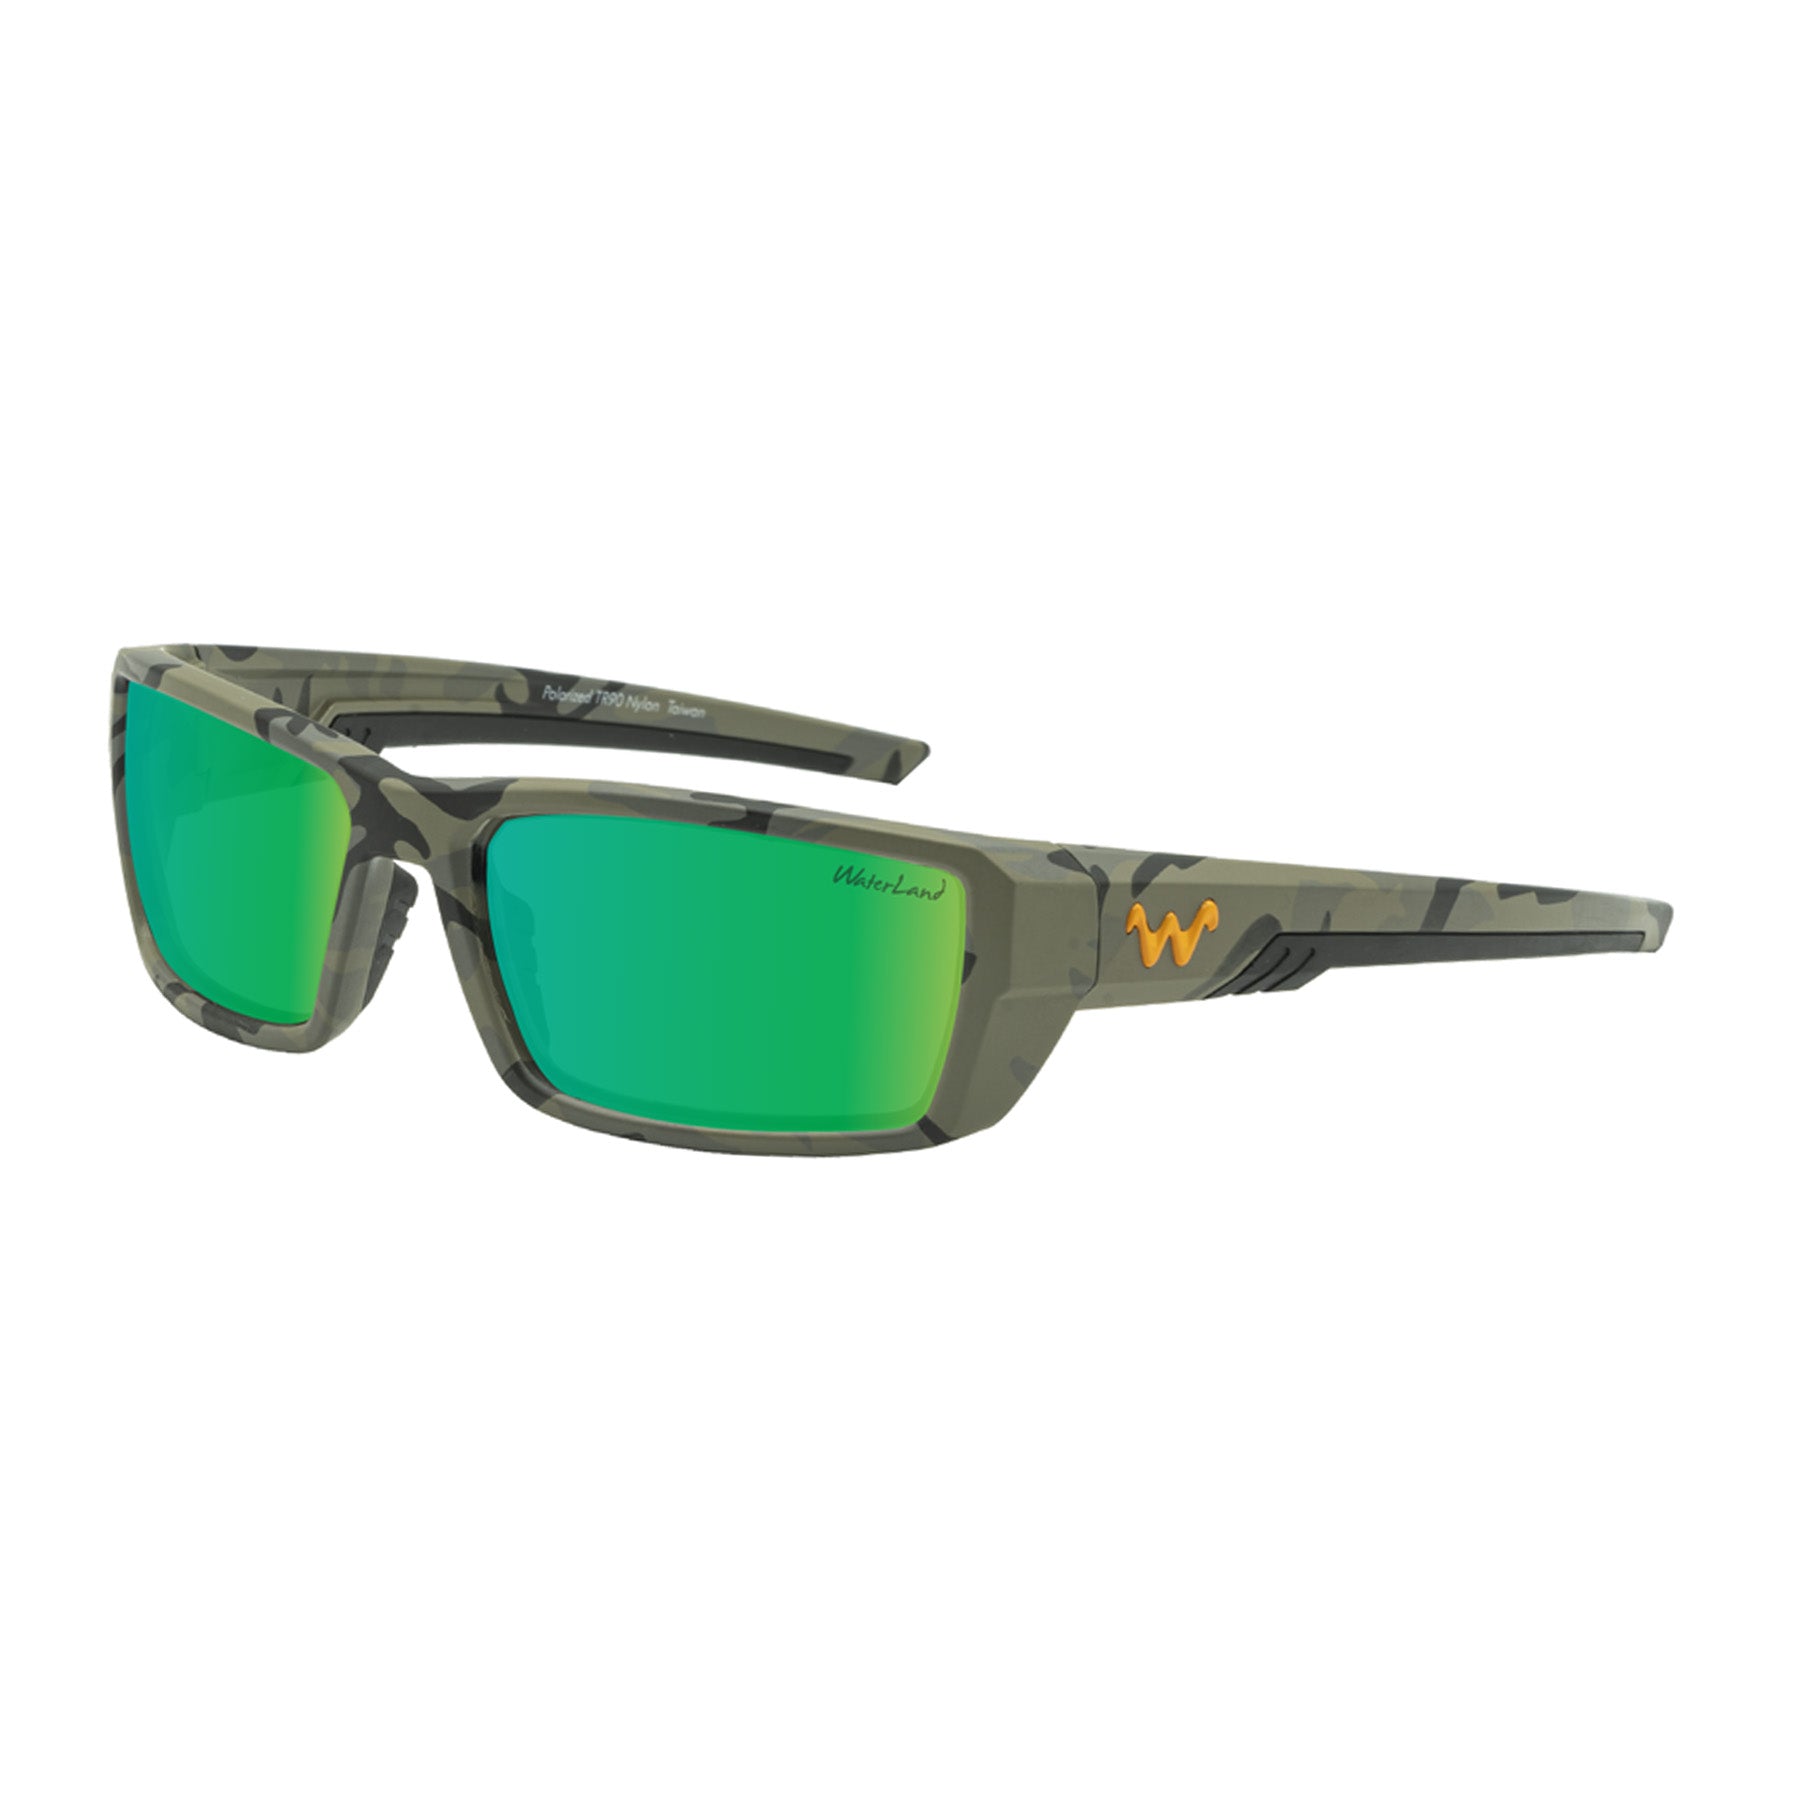 Waterland Ashor Sunglasses Ops Camo/Green Mirror